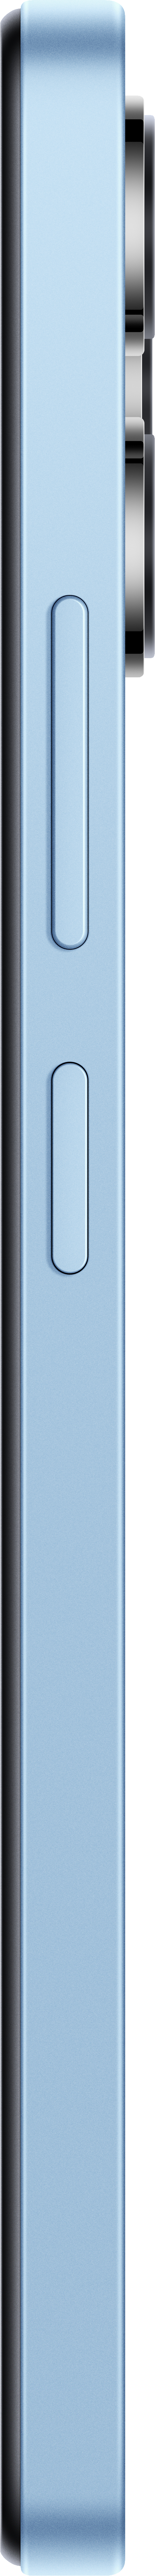 12 GB Redmi Blue SIM Dual XIAOMI 128 Sky